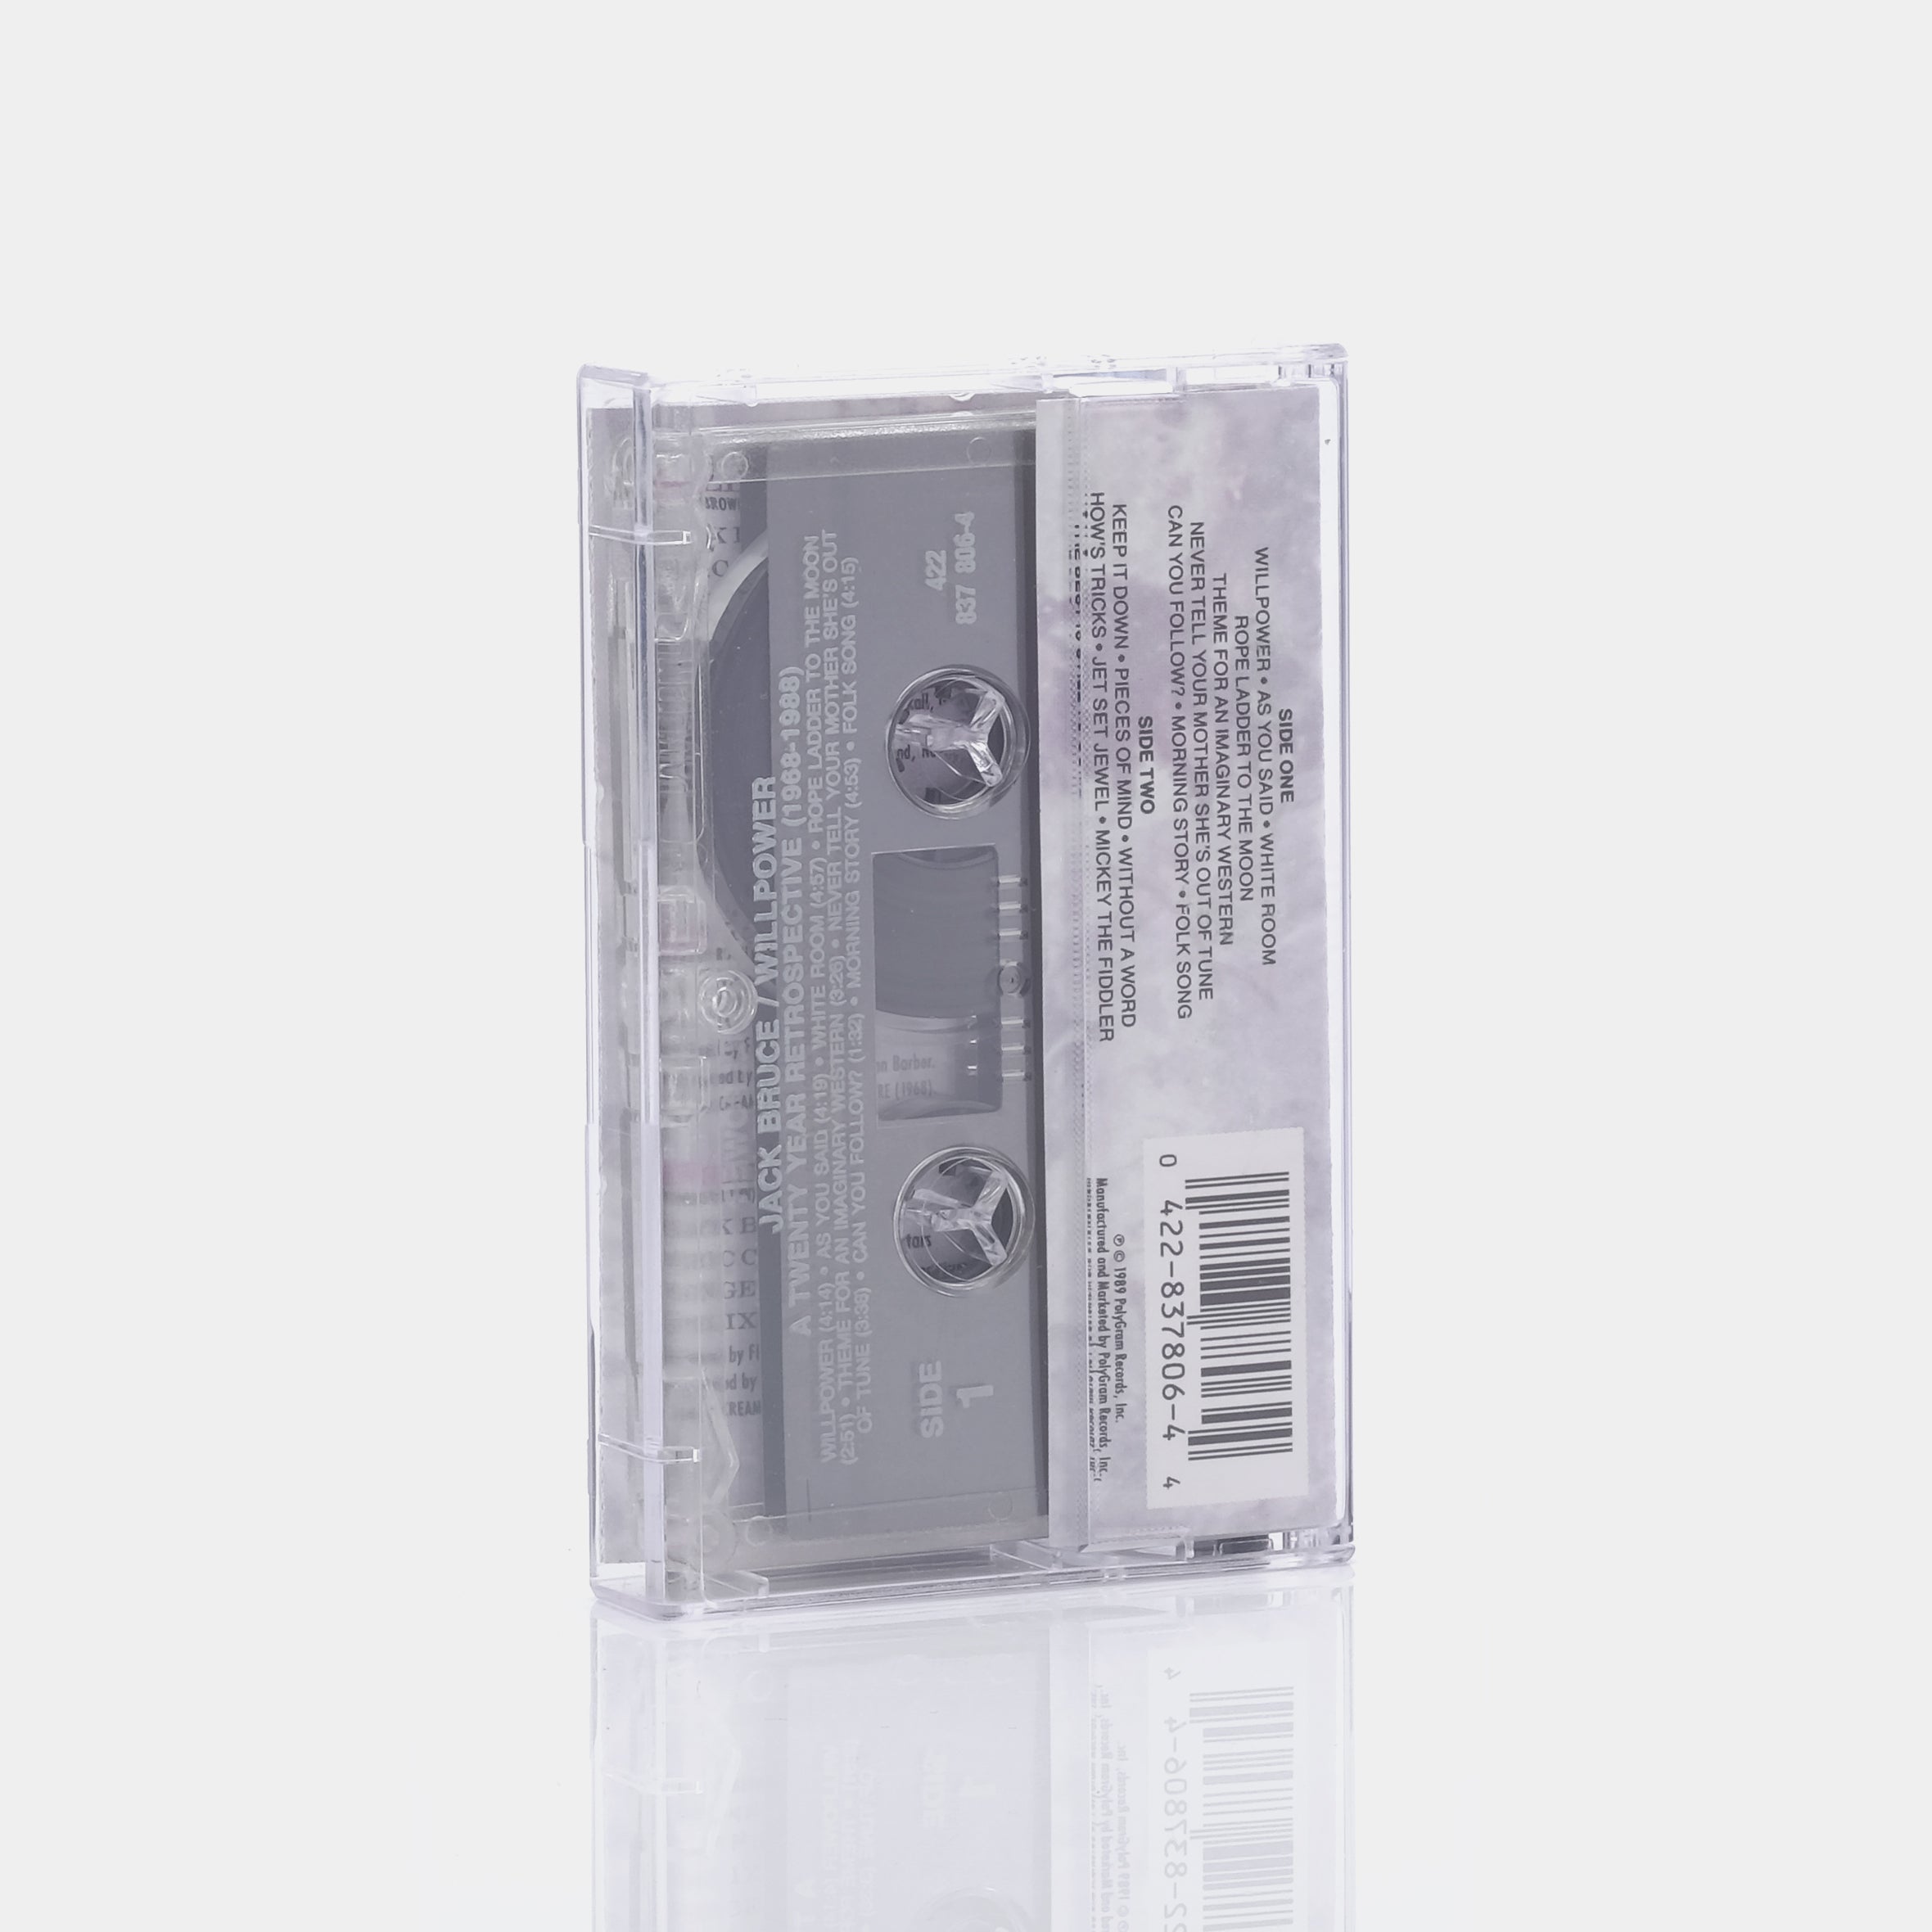 Jack Bruce - Willpower: A 20 Year Retrospective 1968-1988 Cassette Tape